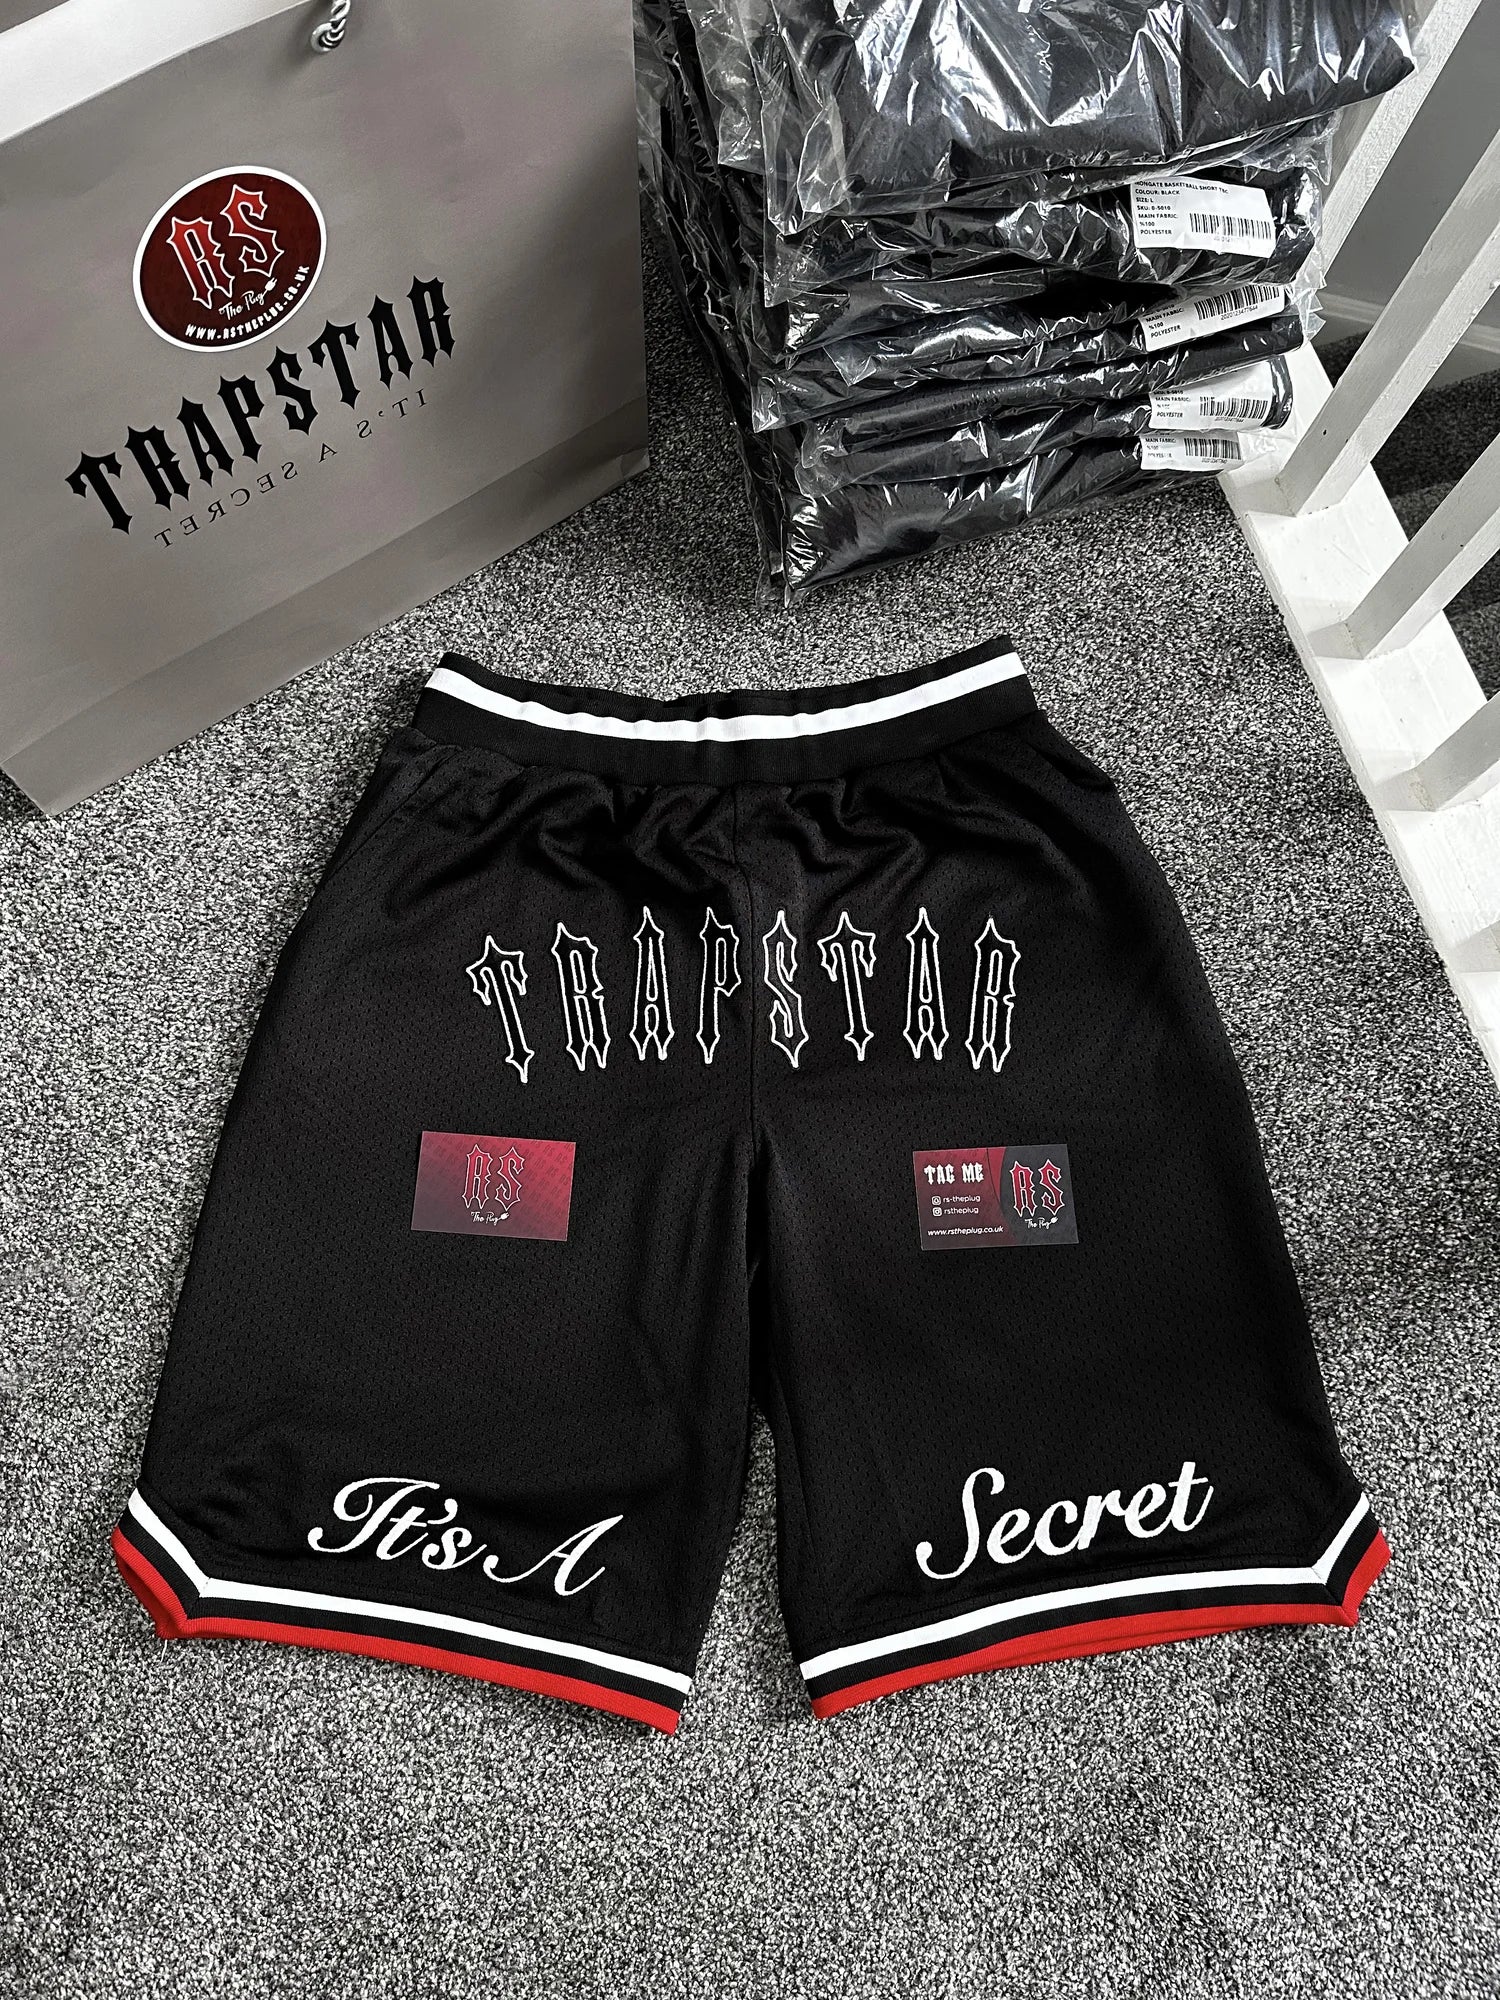 Trapstar Basketball Shorts Black/Red